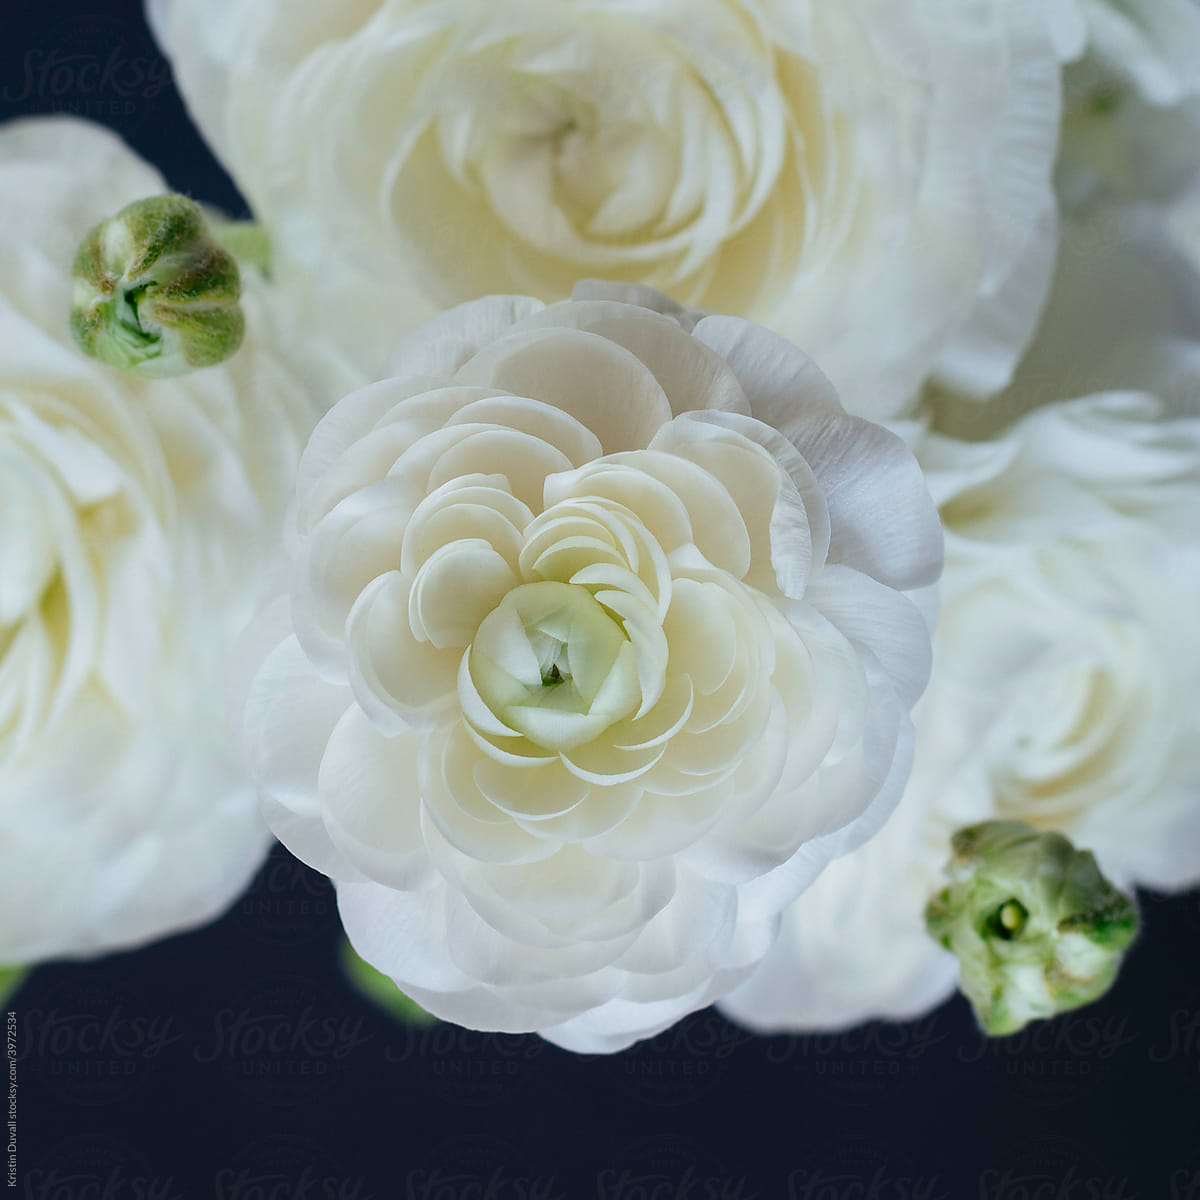 White ranunculus flowers